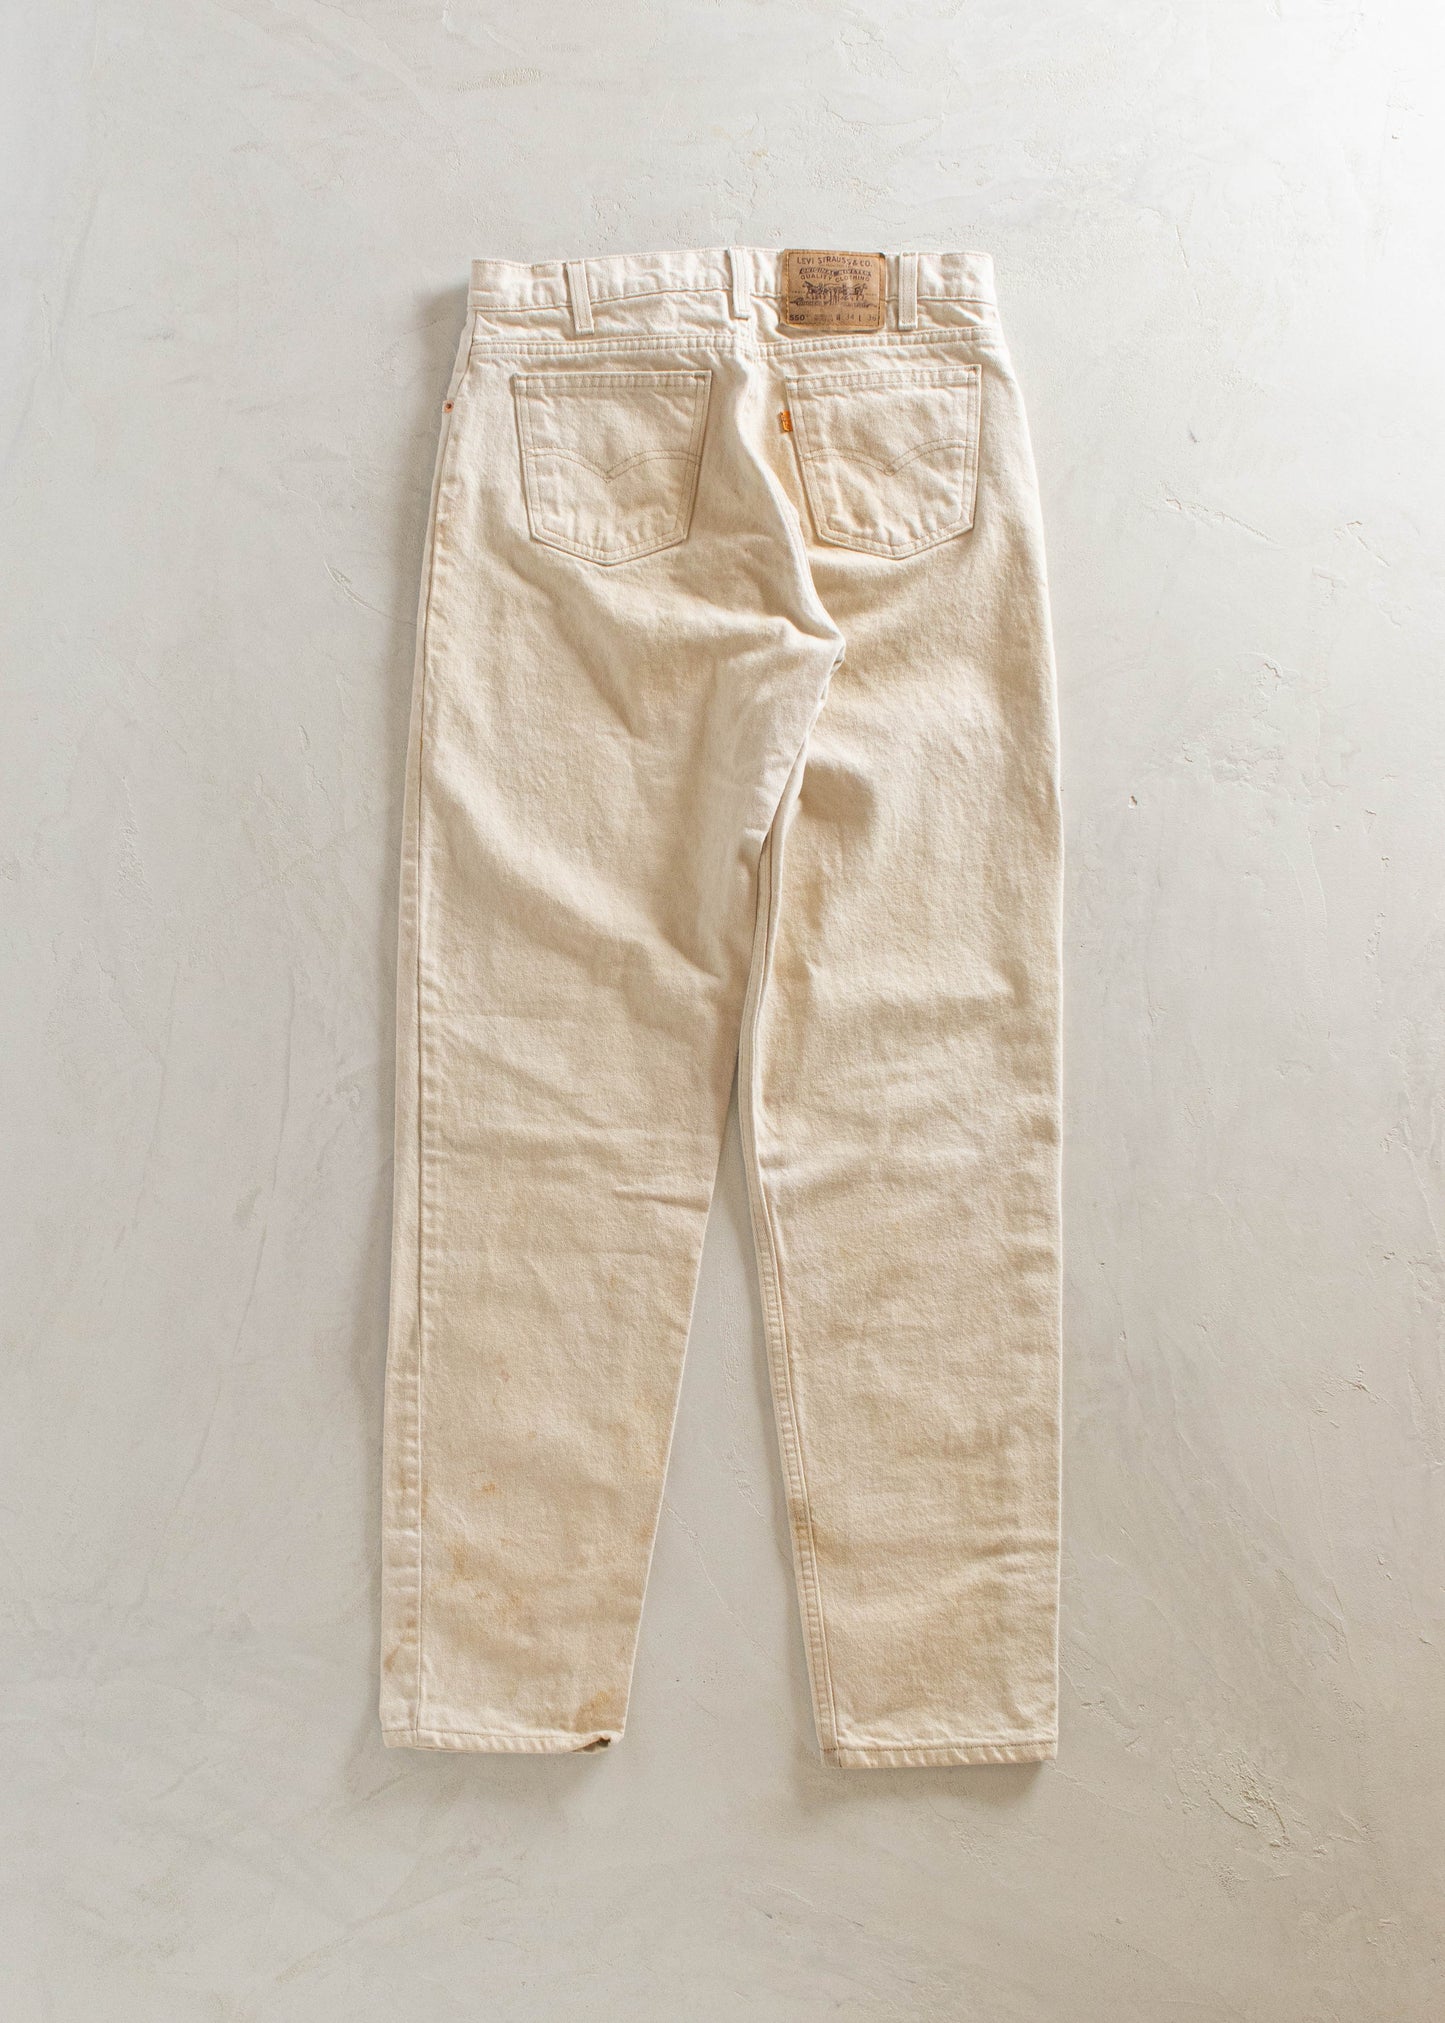 1980s Levi's 550 White Jeans Size Women's 31 Men's 33